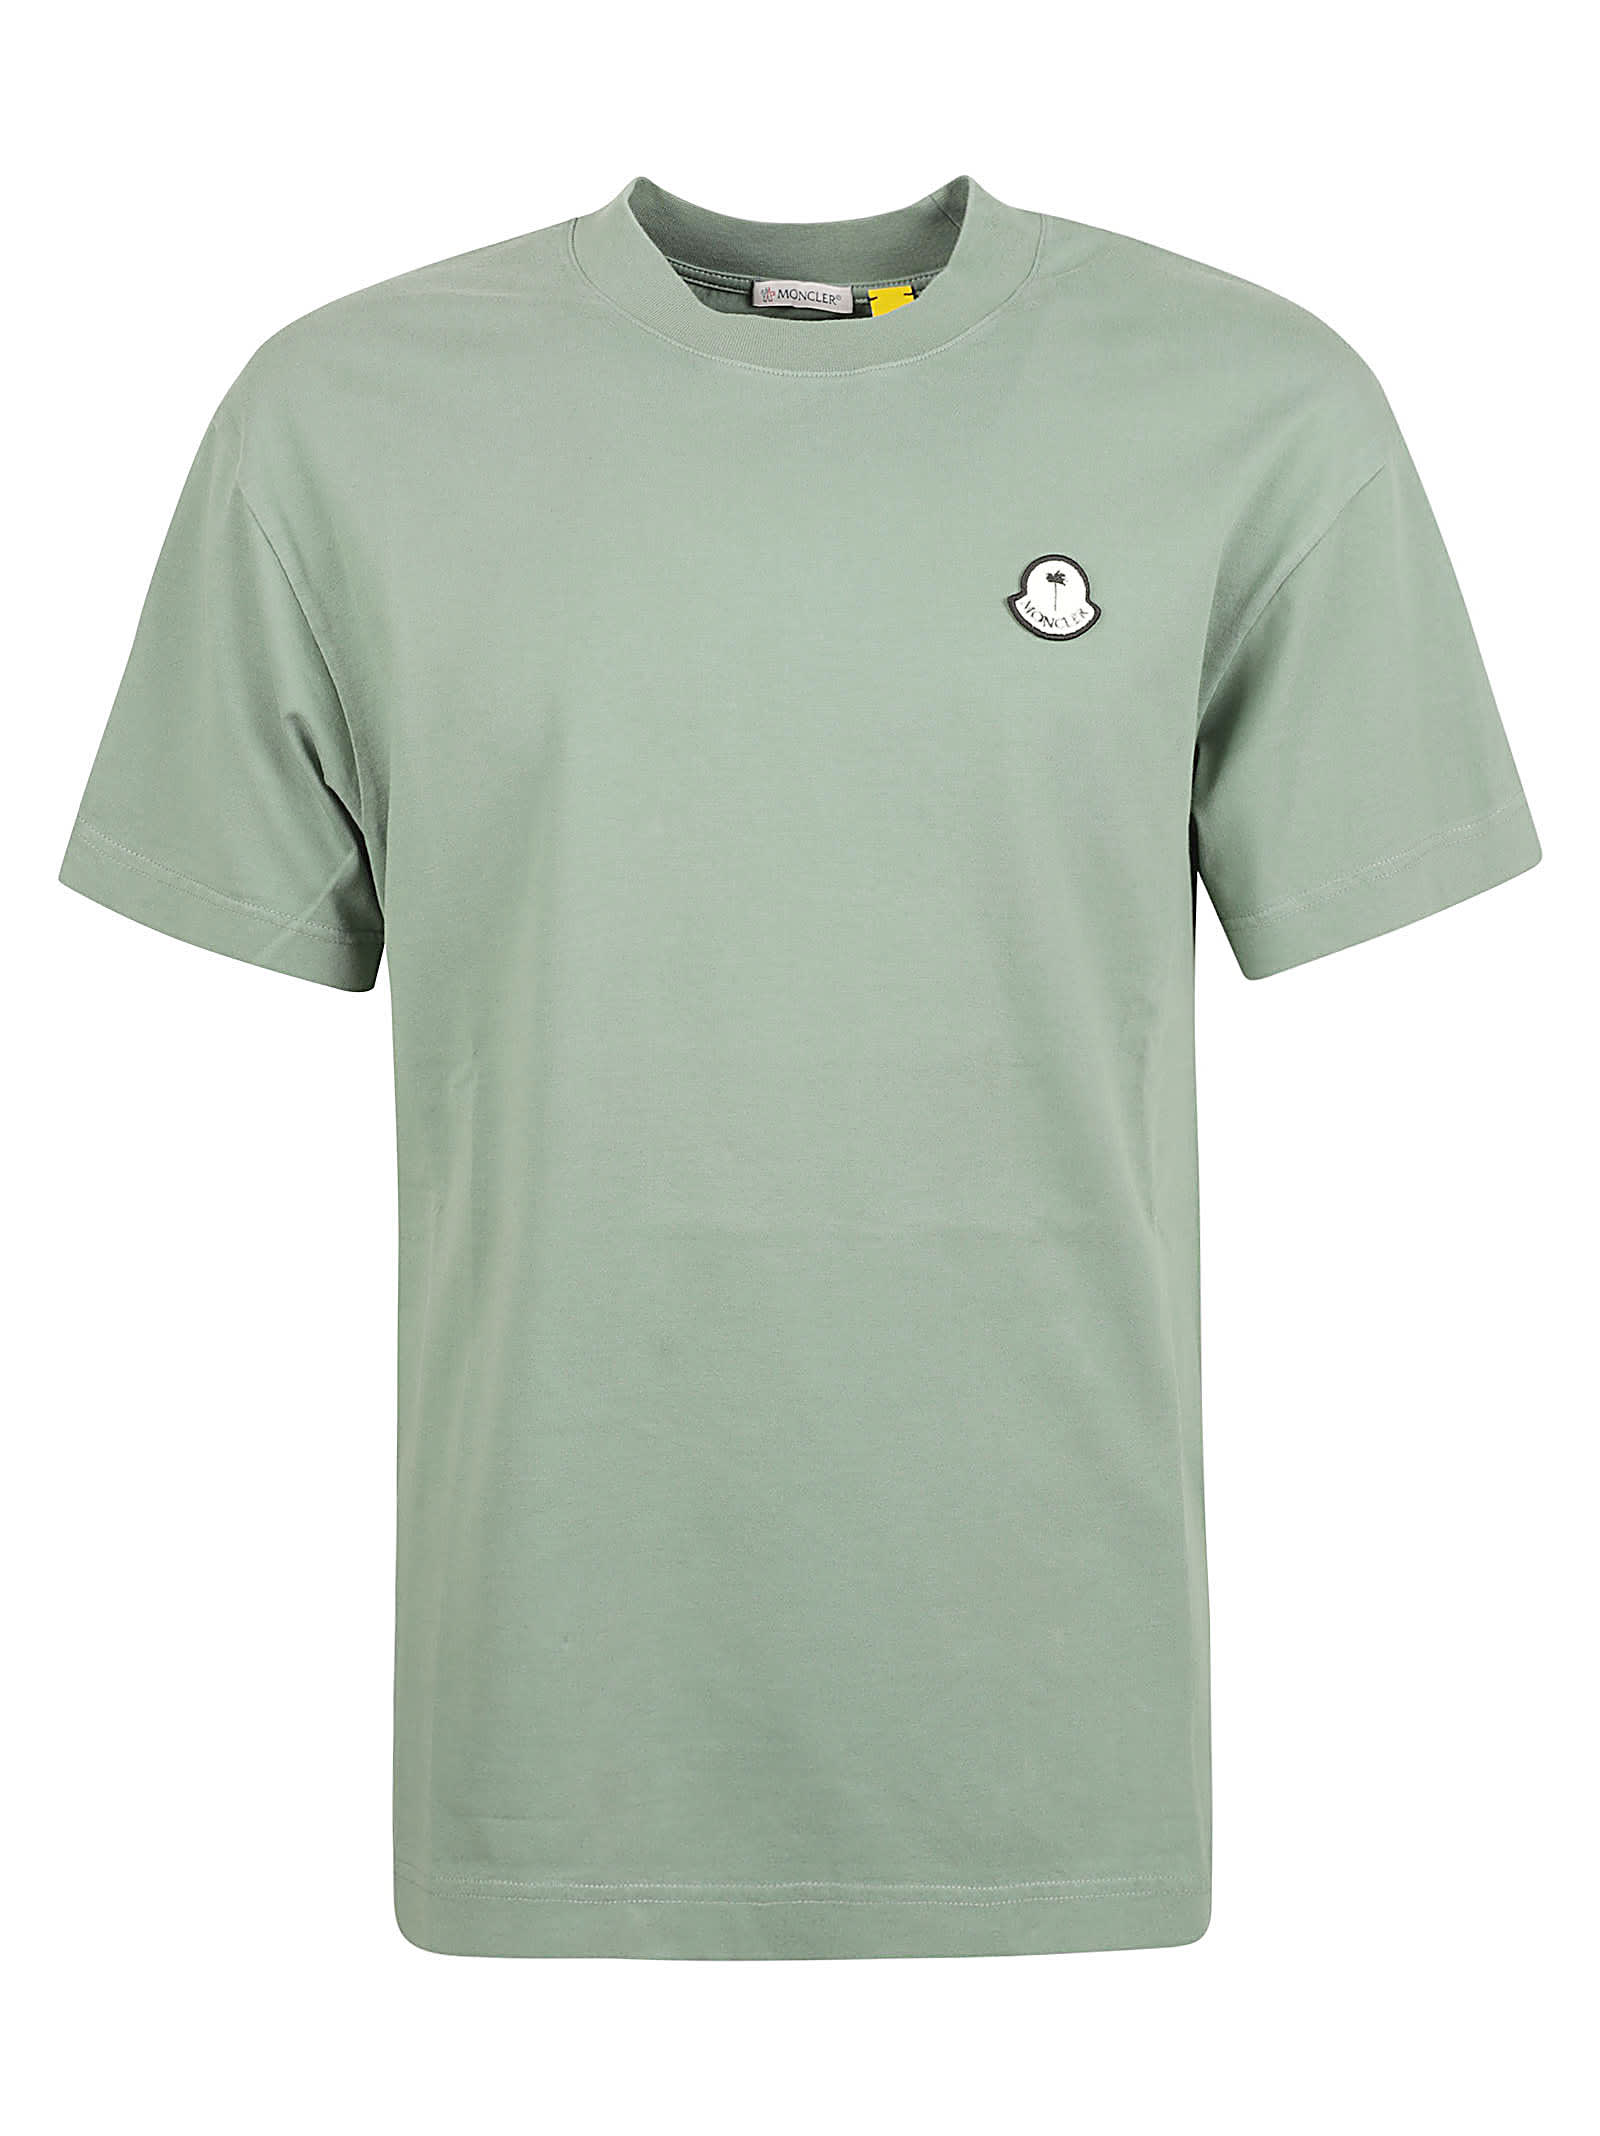 Moncler Genius 2 Moncler 1952 Green Double Logo T Shirt, $320